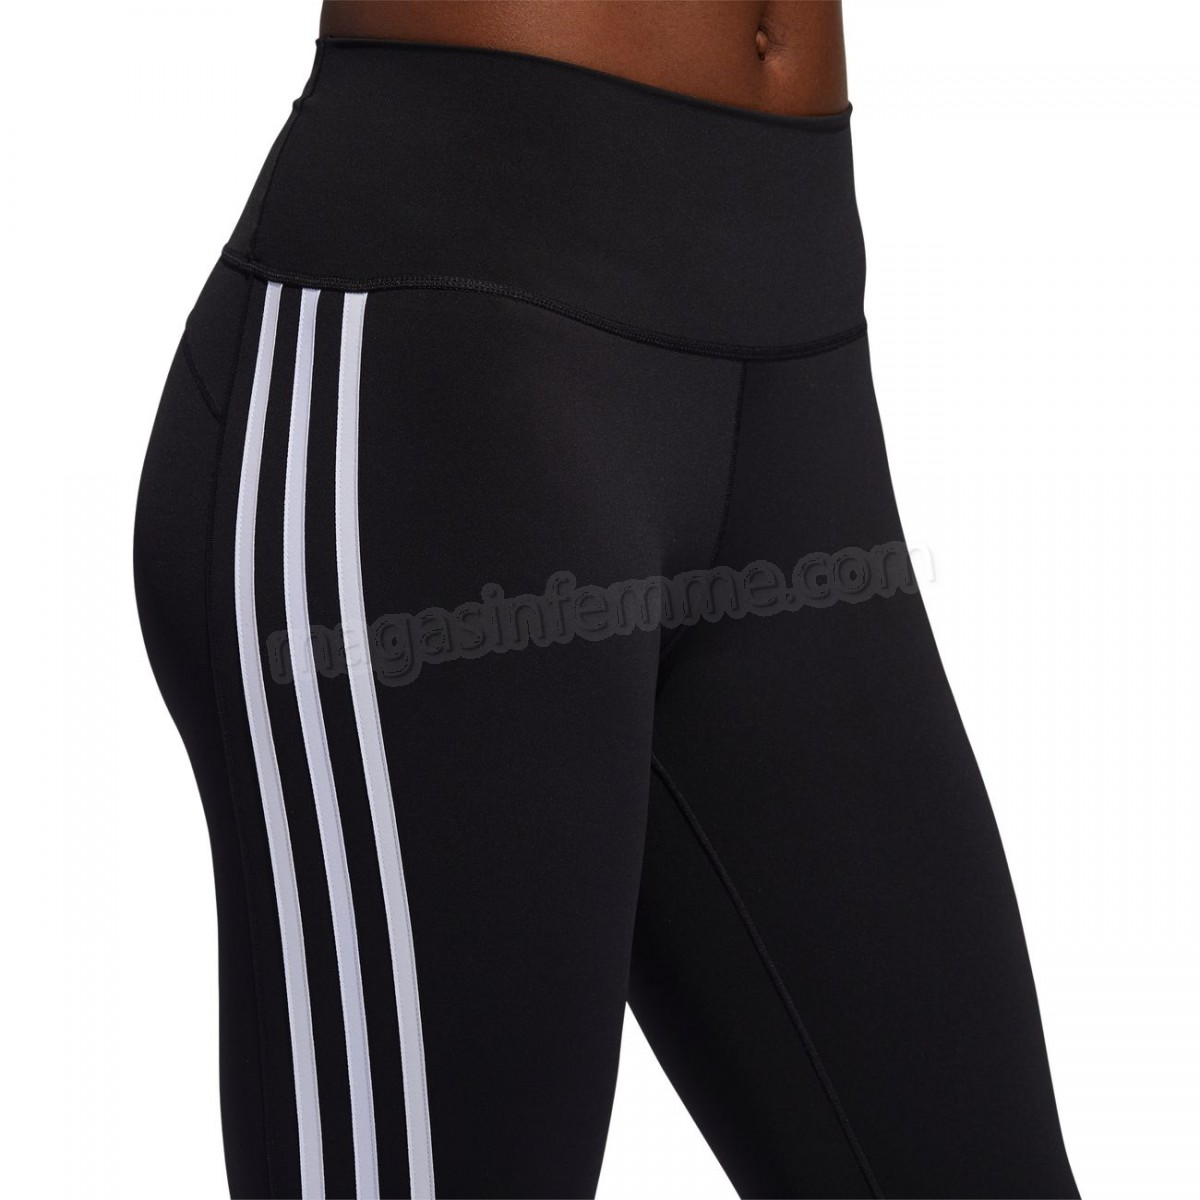 Adidas-Fitness femme ADIDAS Collant femme 3/4 adidas Believe This 3-Stripes en solde - -7